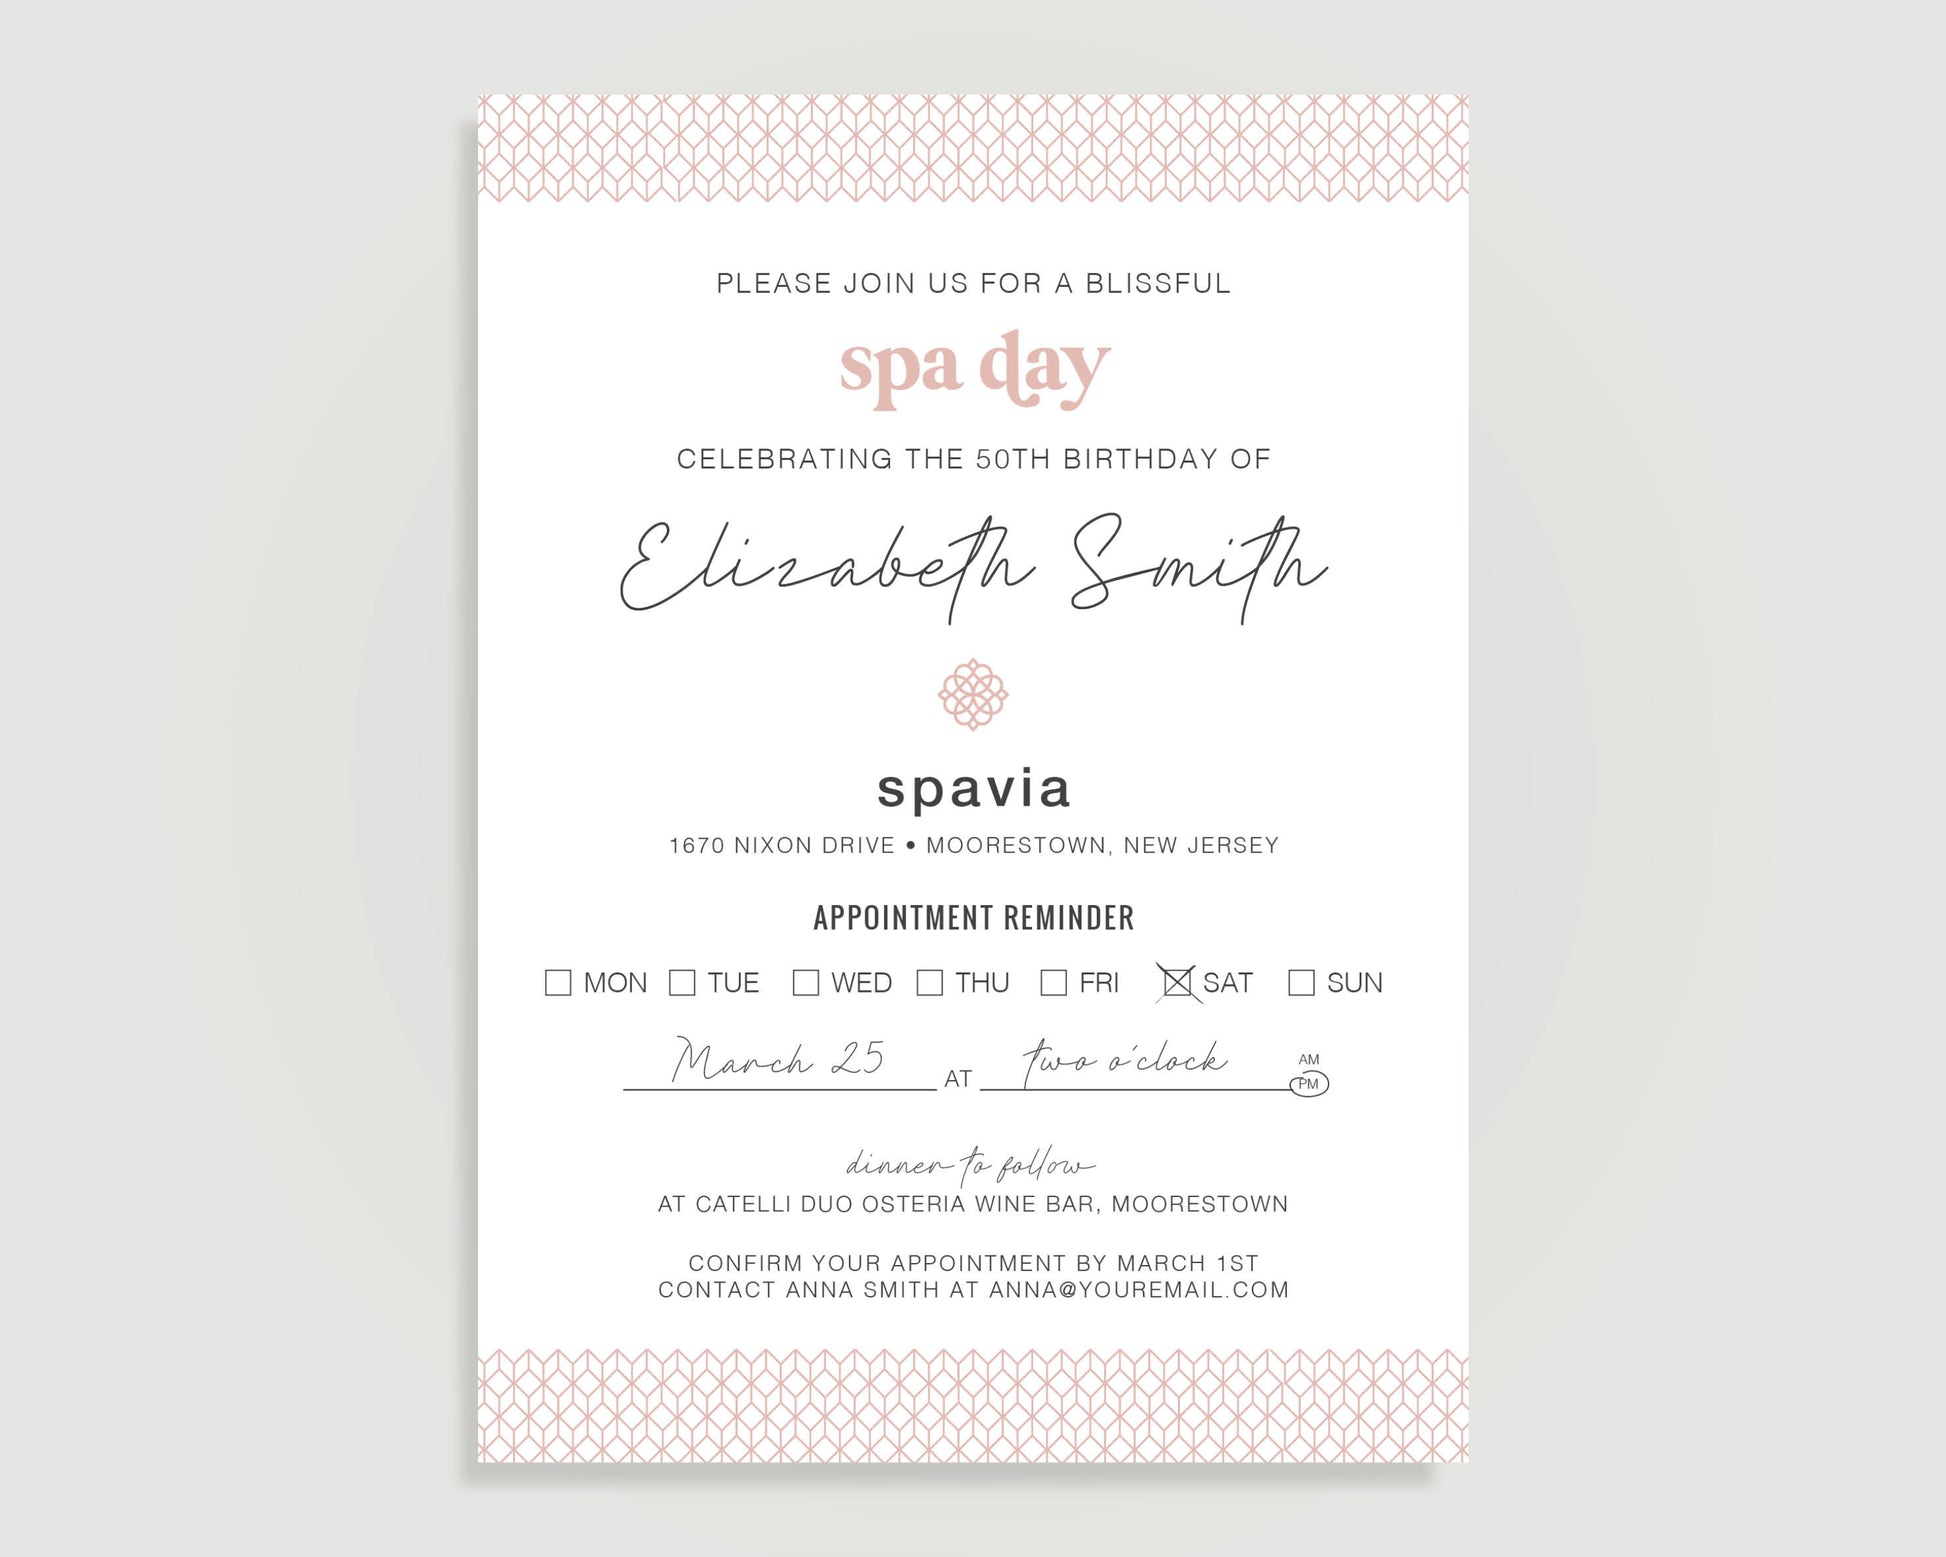 Spavia Birthday Spalebration Invitation